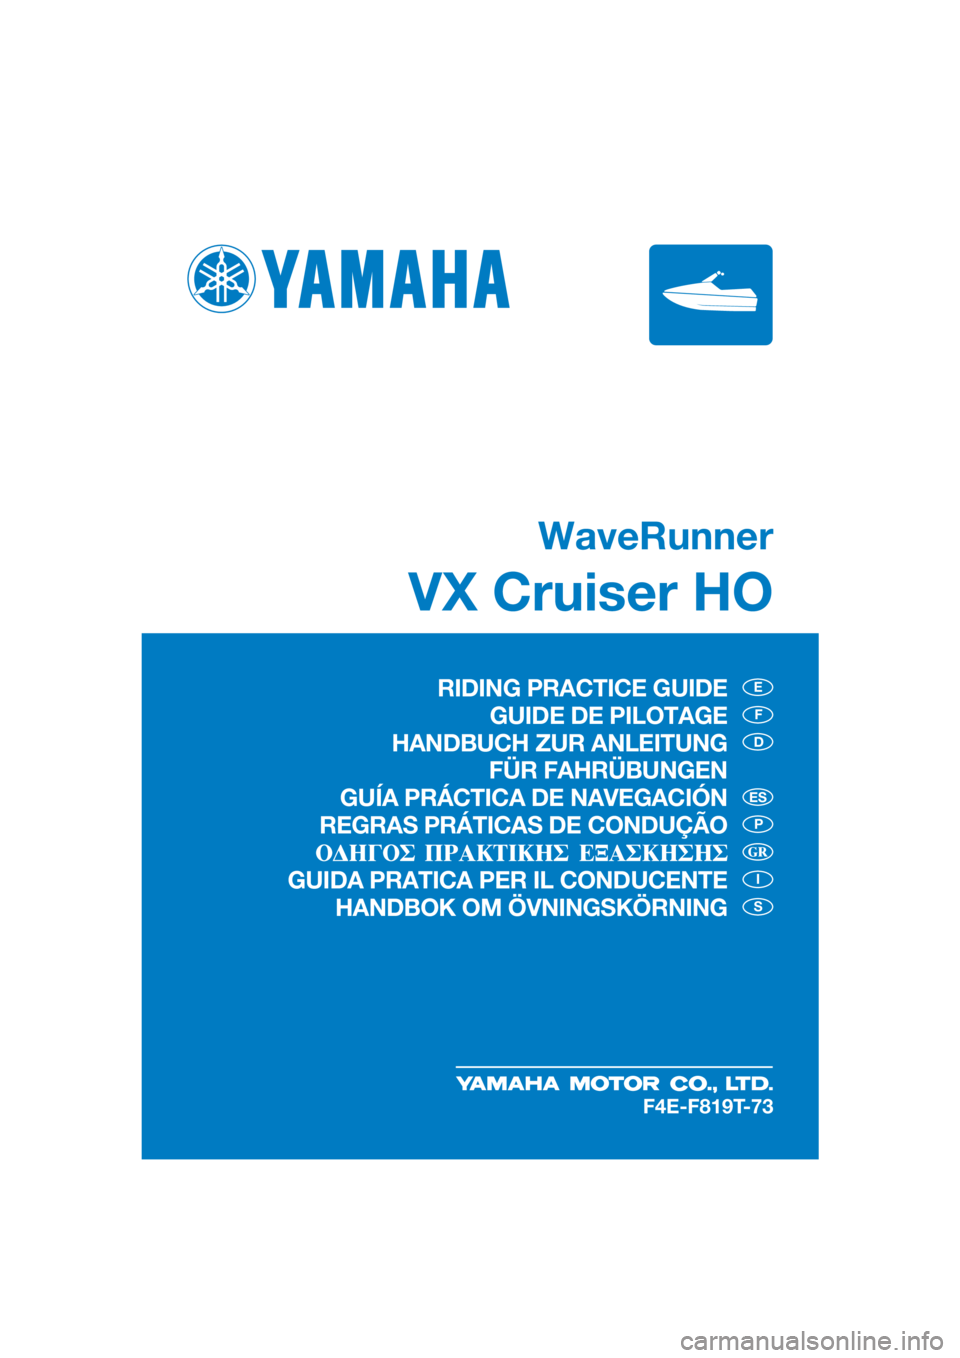 YAMAHA VX CRUISER HO 2020  Manuale de Empleo (in Spanish) 